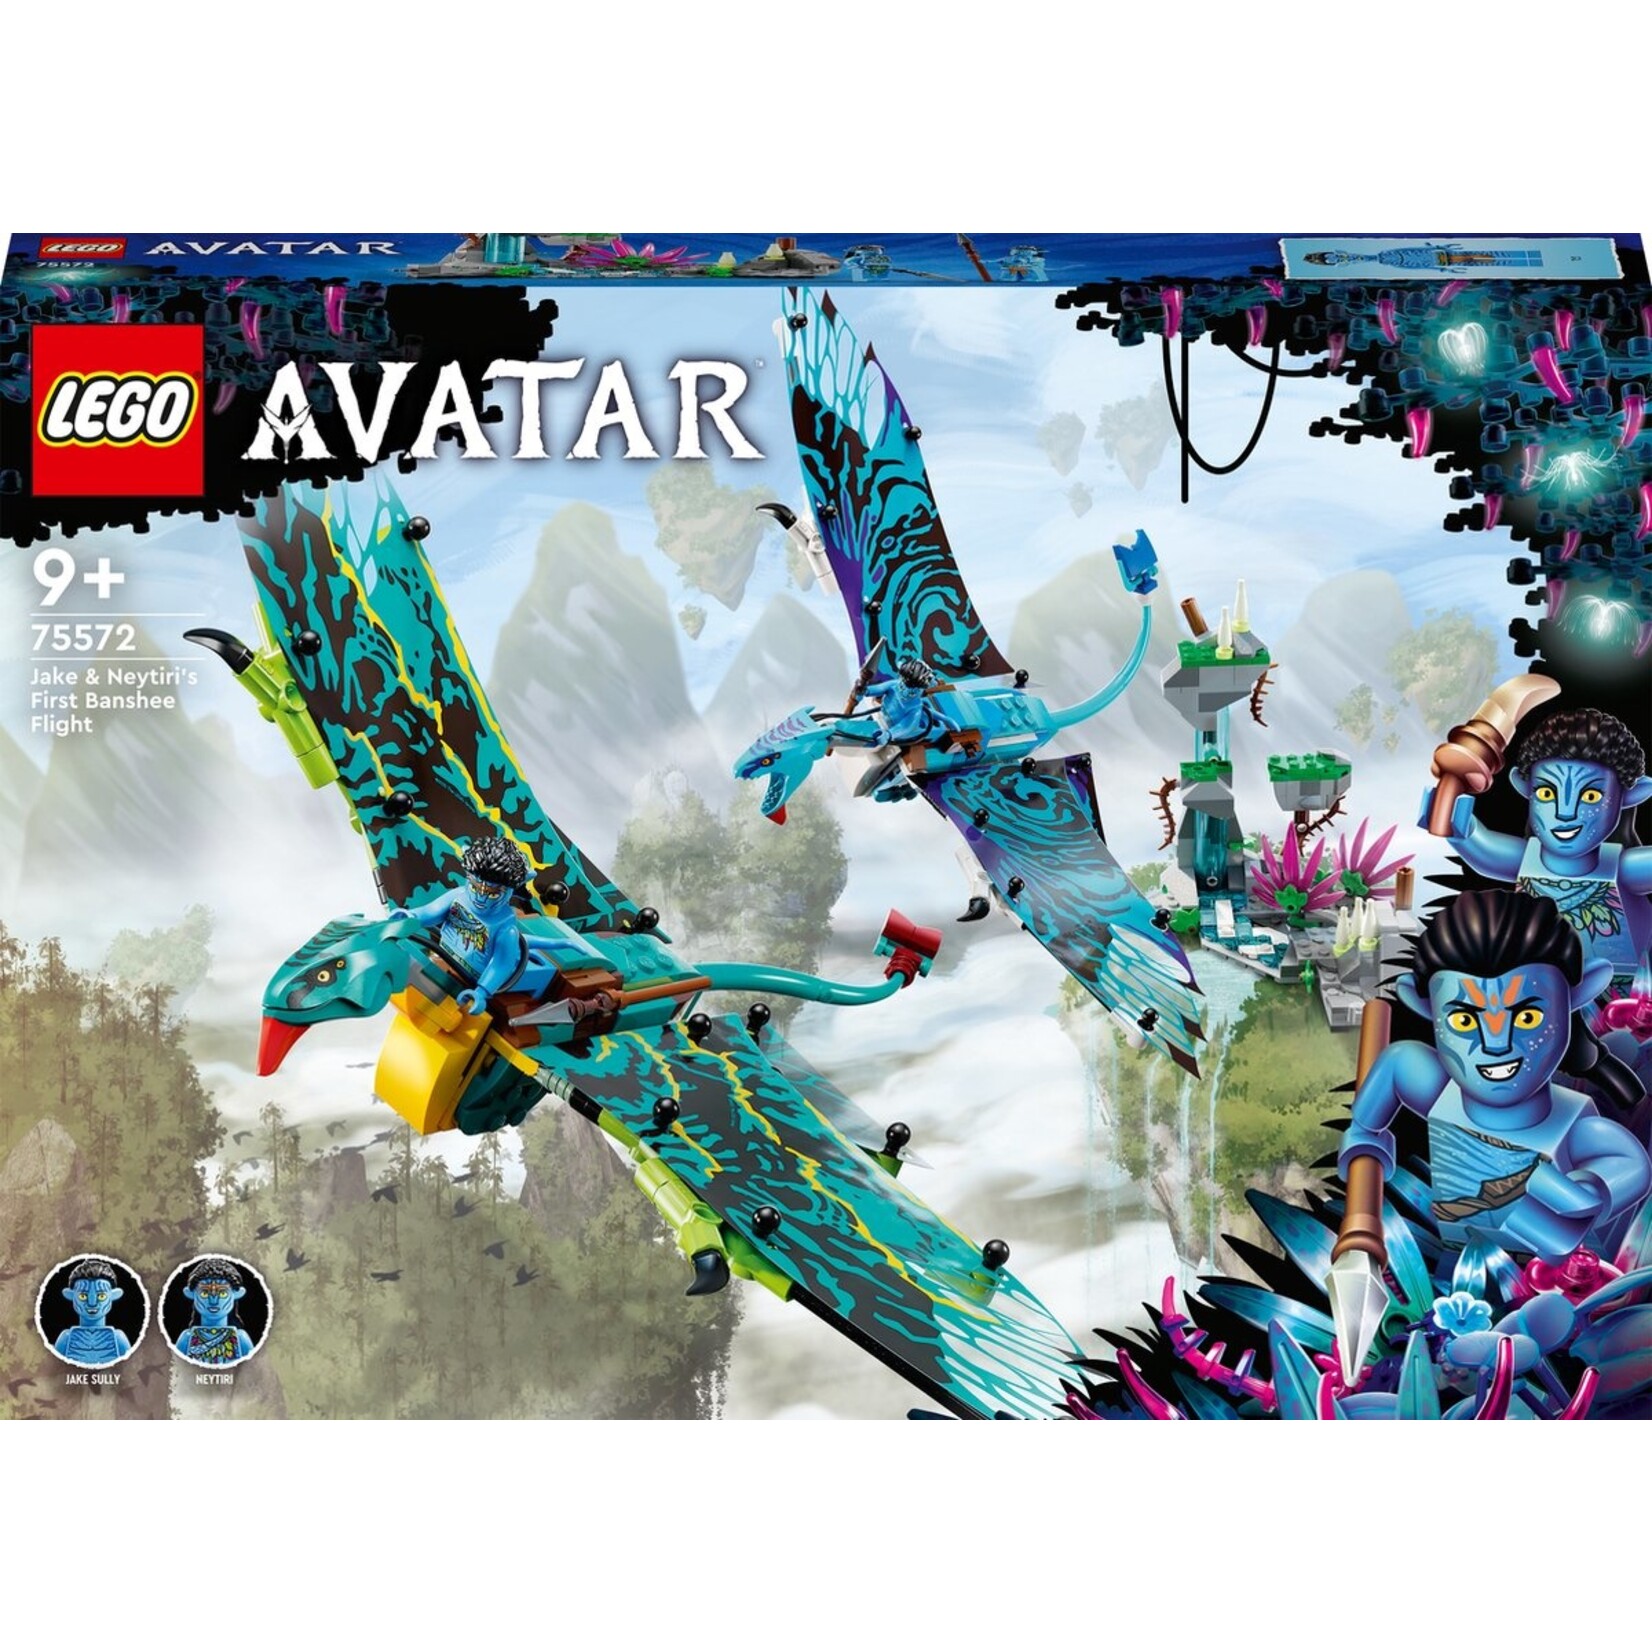 LEGO LEGO Avatar Jake & Neytiri’s First Banshee Flight (75572)